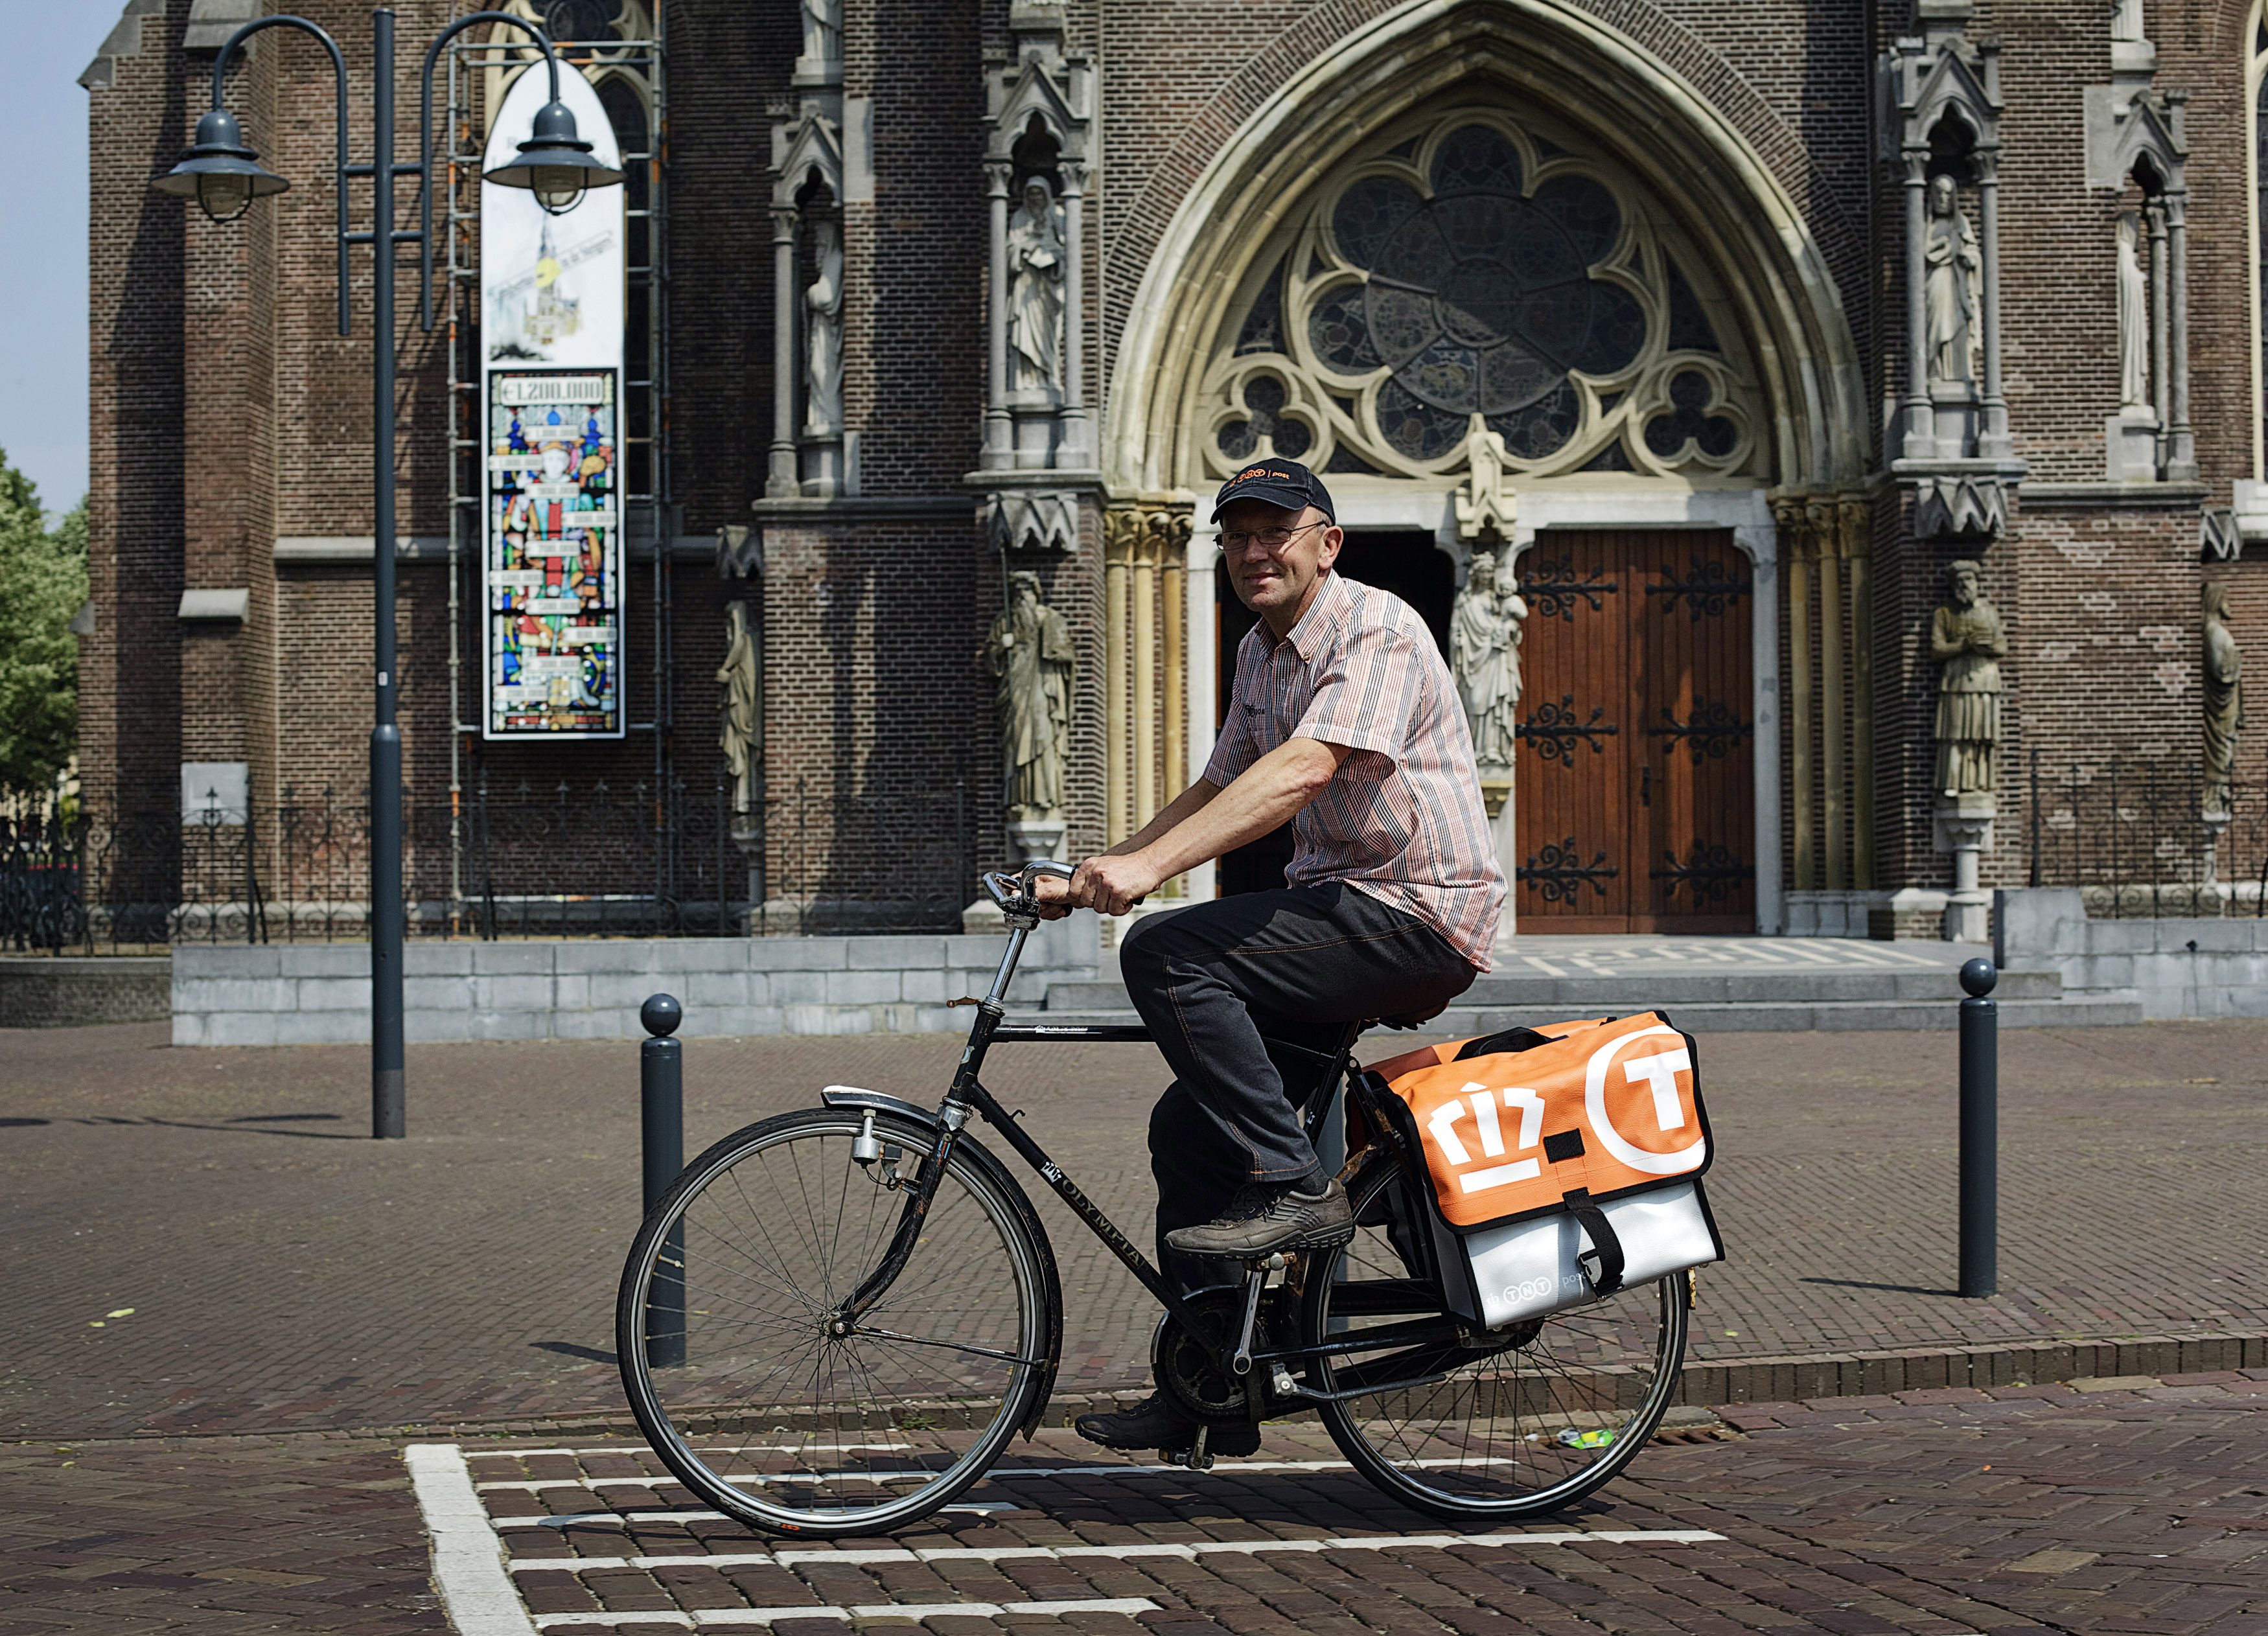 Postnl employee Jaap Bouwmans rides his bicycle to work in his hometown Veghel